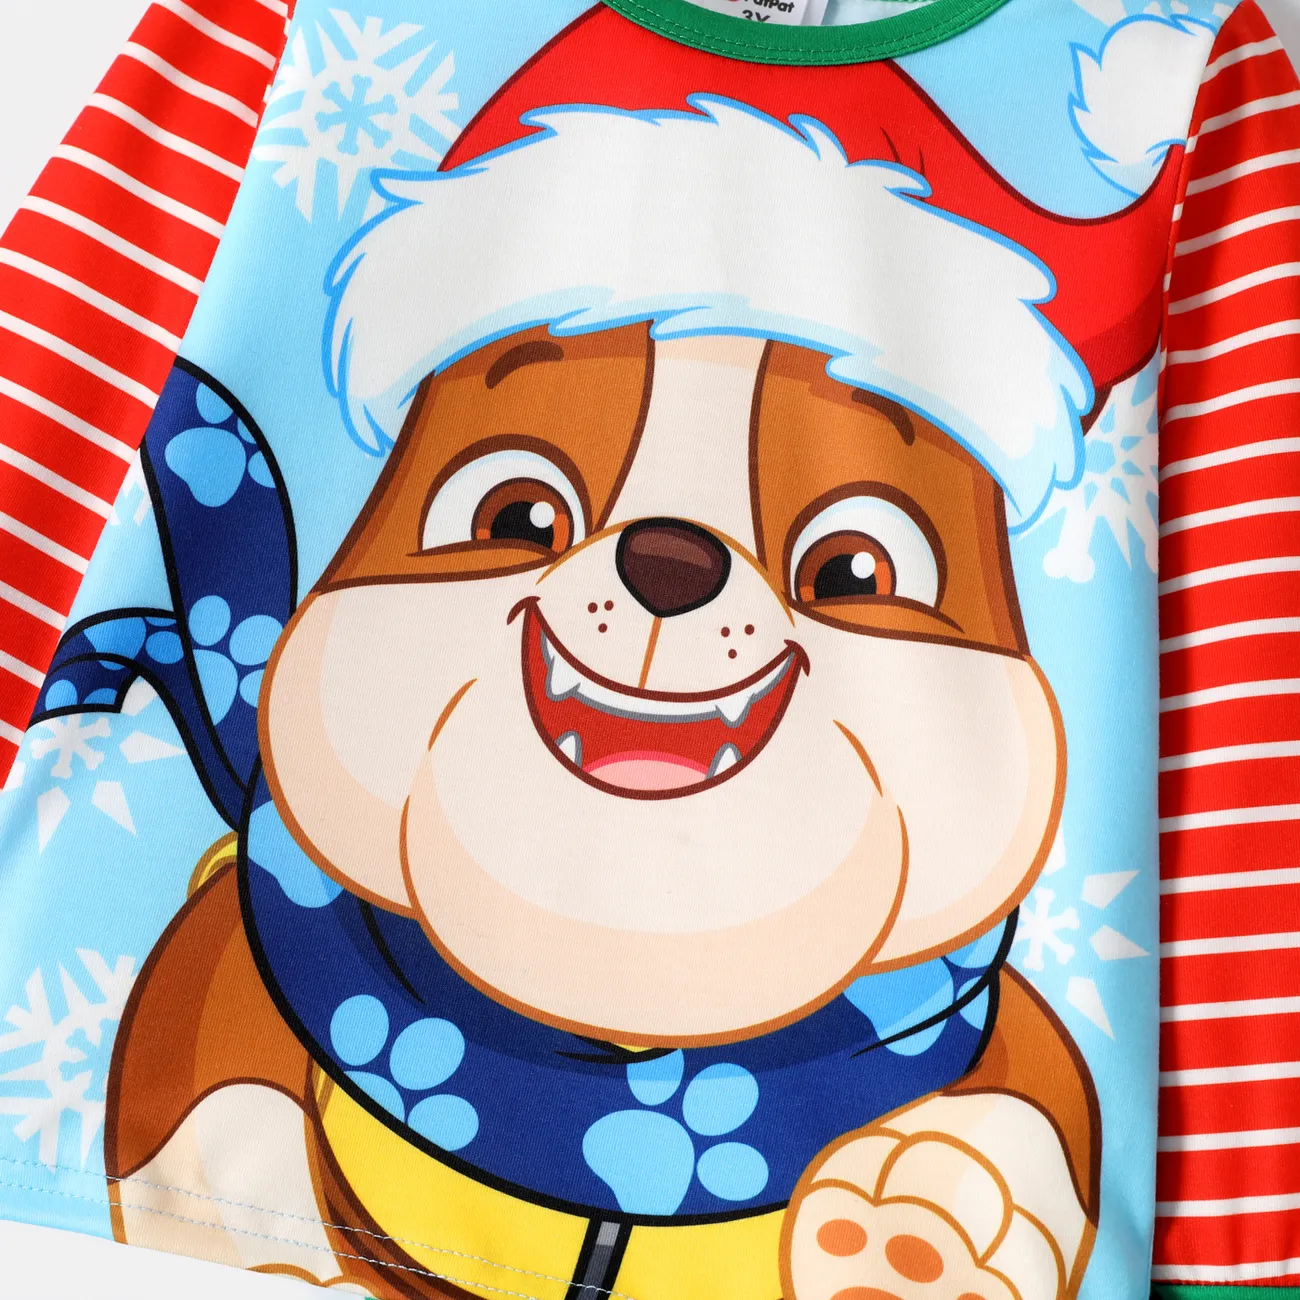 PAW Patrol 2pcs 2pcs Toddler Boy/Girl Christmas Striped Colorblock Long-sleeve Tee and Pants Set REDWHITE big image 1